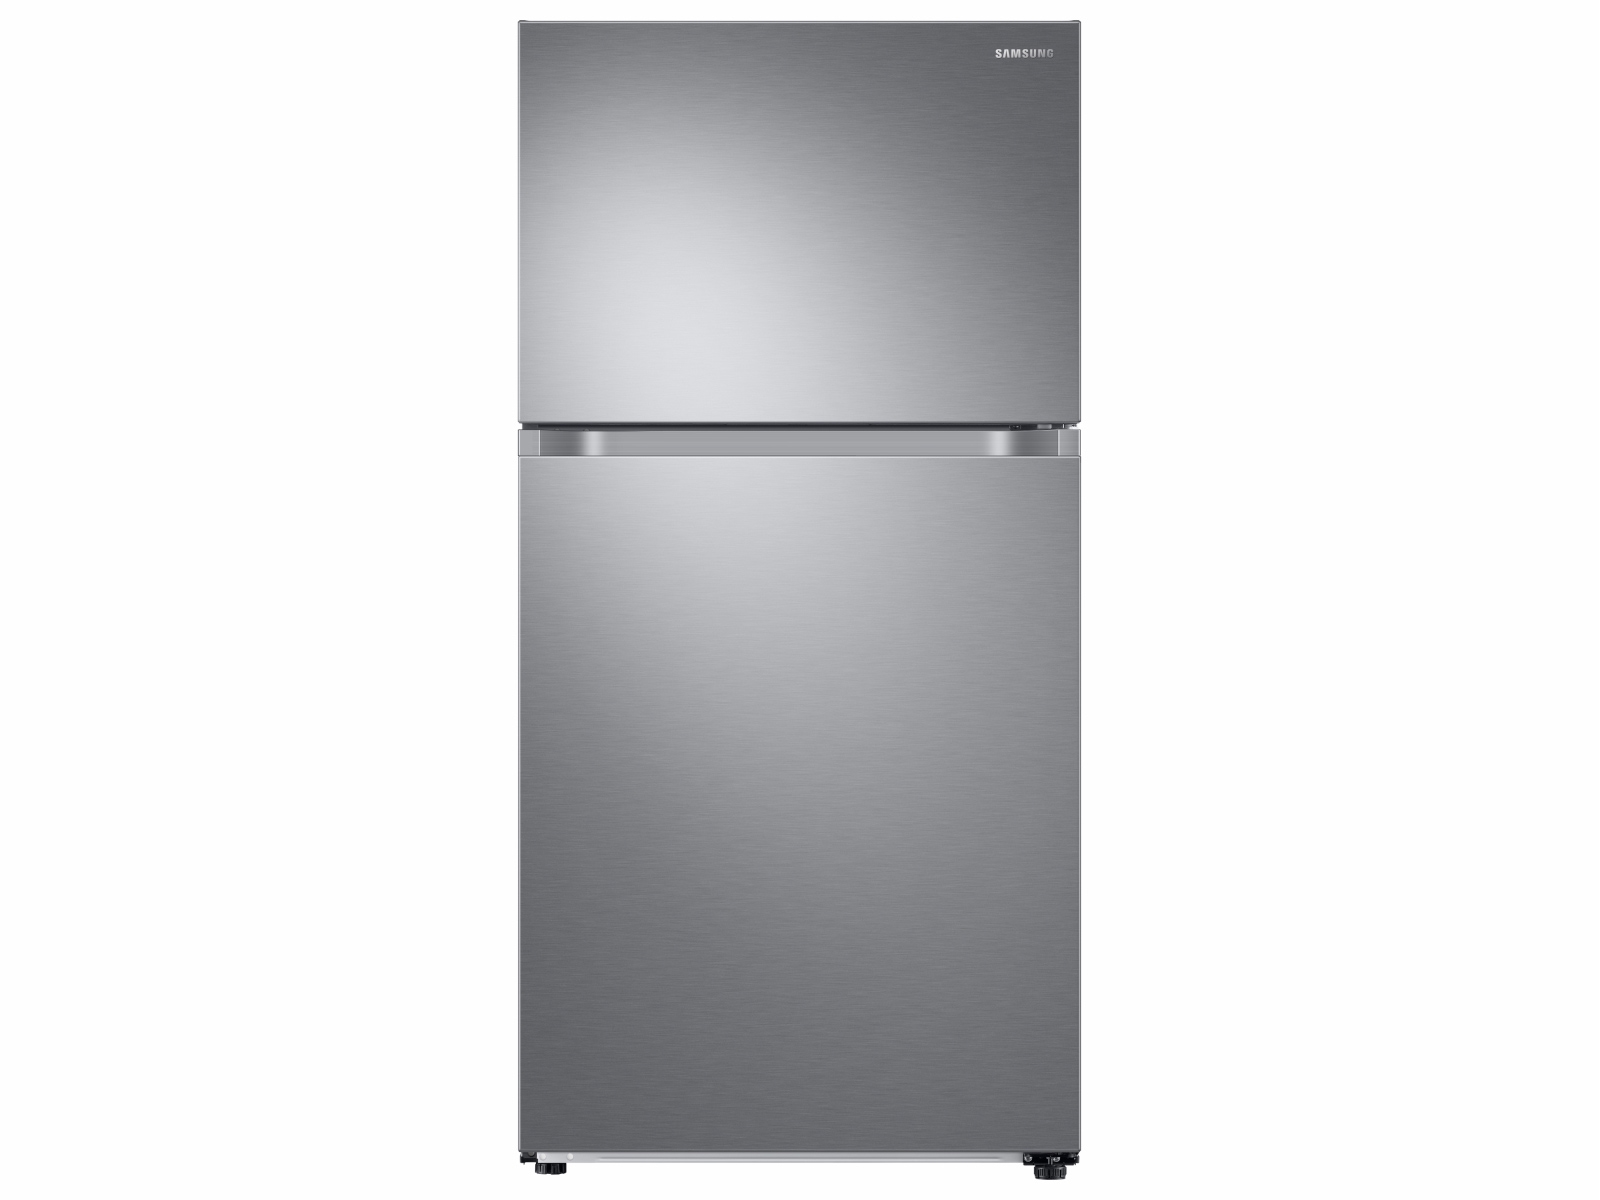 https://image-us.samsung.com/SamsungUS/home/home-appliances/refrigerators/top-mount/rt21m6213sr/gallery/20171025/01_Refrigerator_Top_Freezer_RT21M6213SR_Front_Closed_Silver-20171025.jpg?$product-details-jpg$